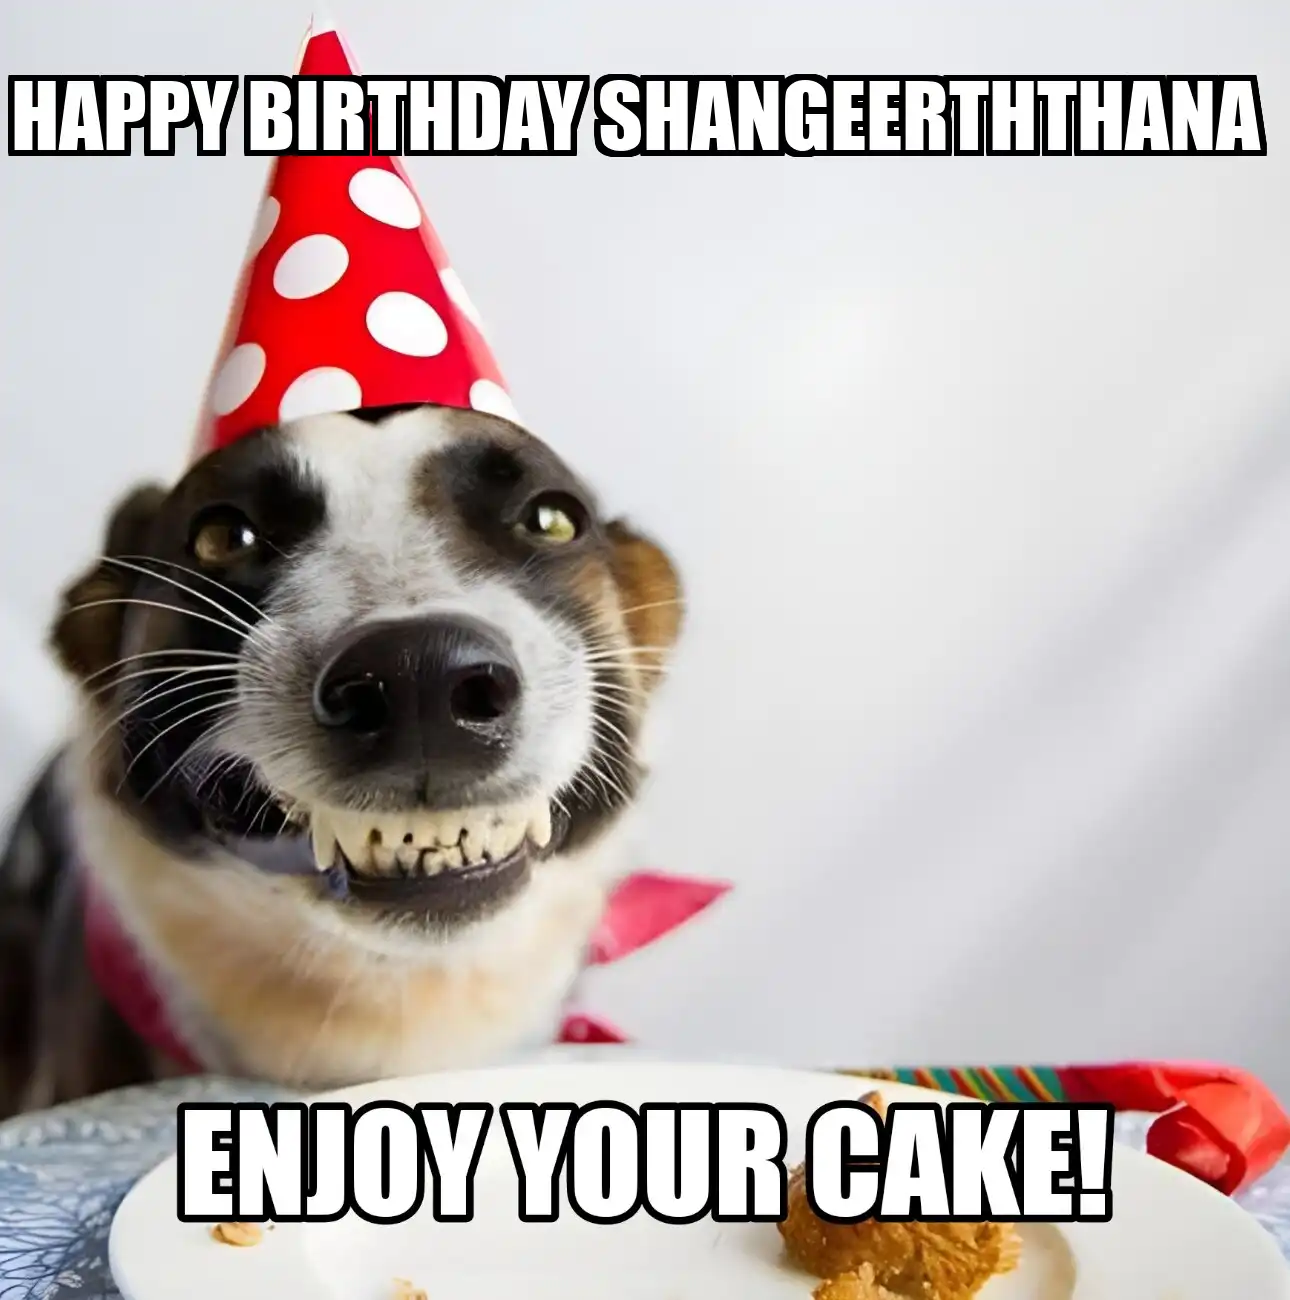 Happy Birthday Shangeerththana Enjoy Your Cake Dog Meme